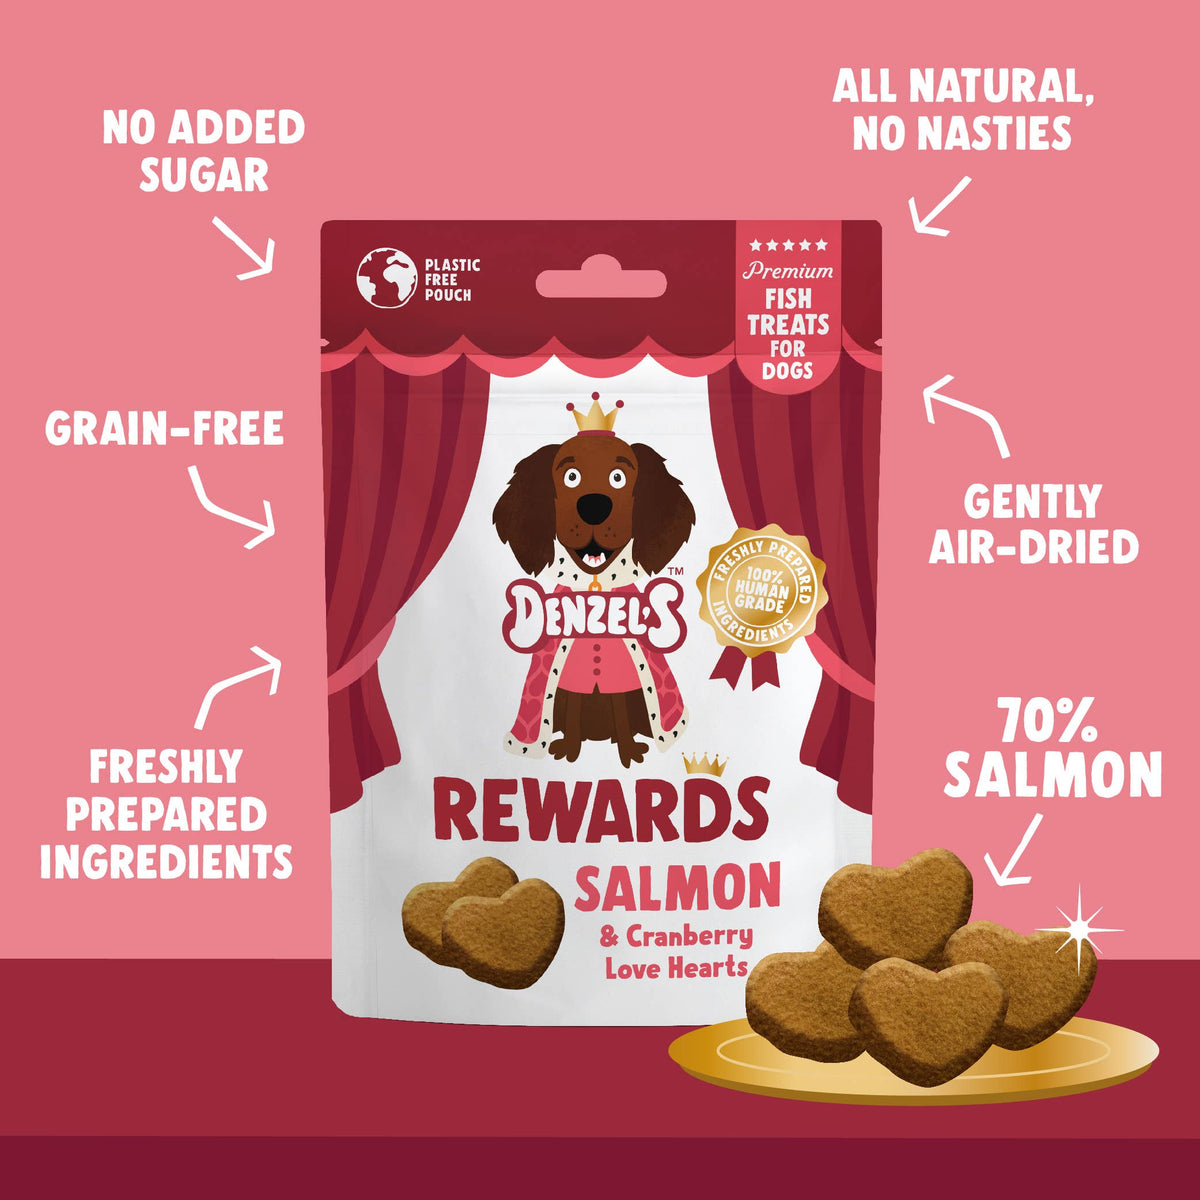 Rewards: Salmon & Cranberry Love Hearts 70g